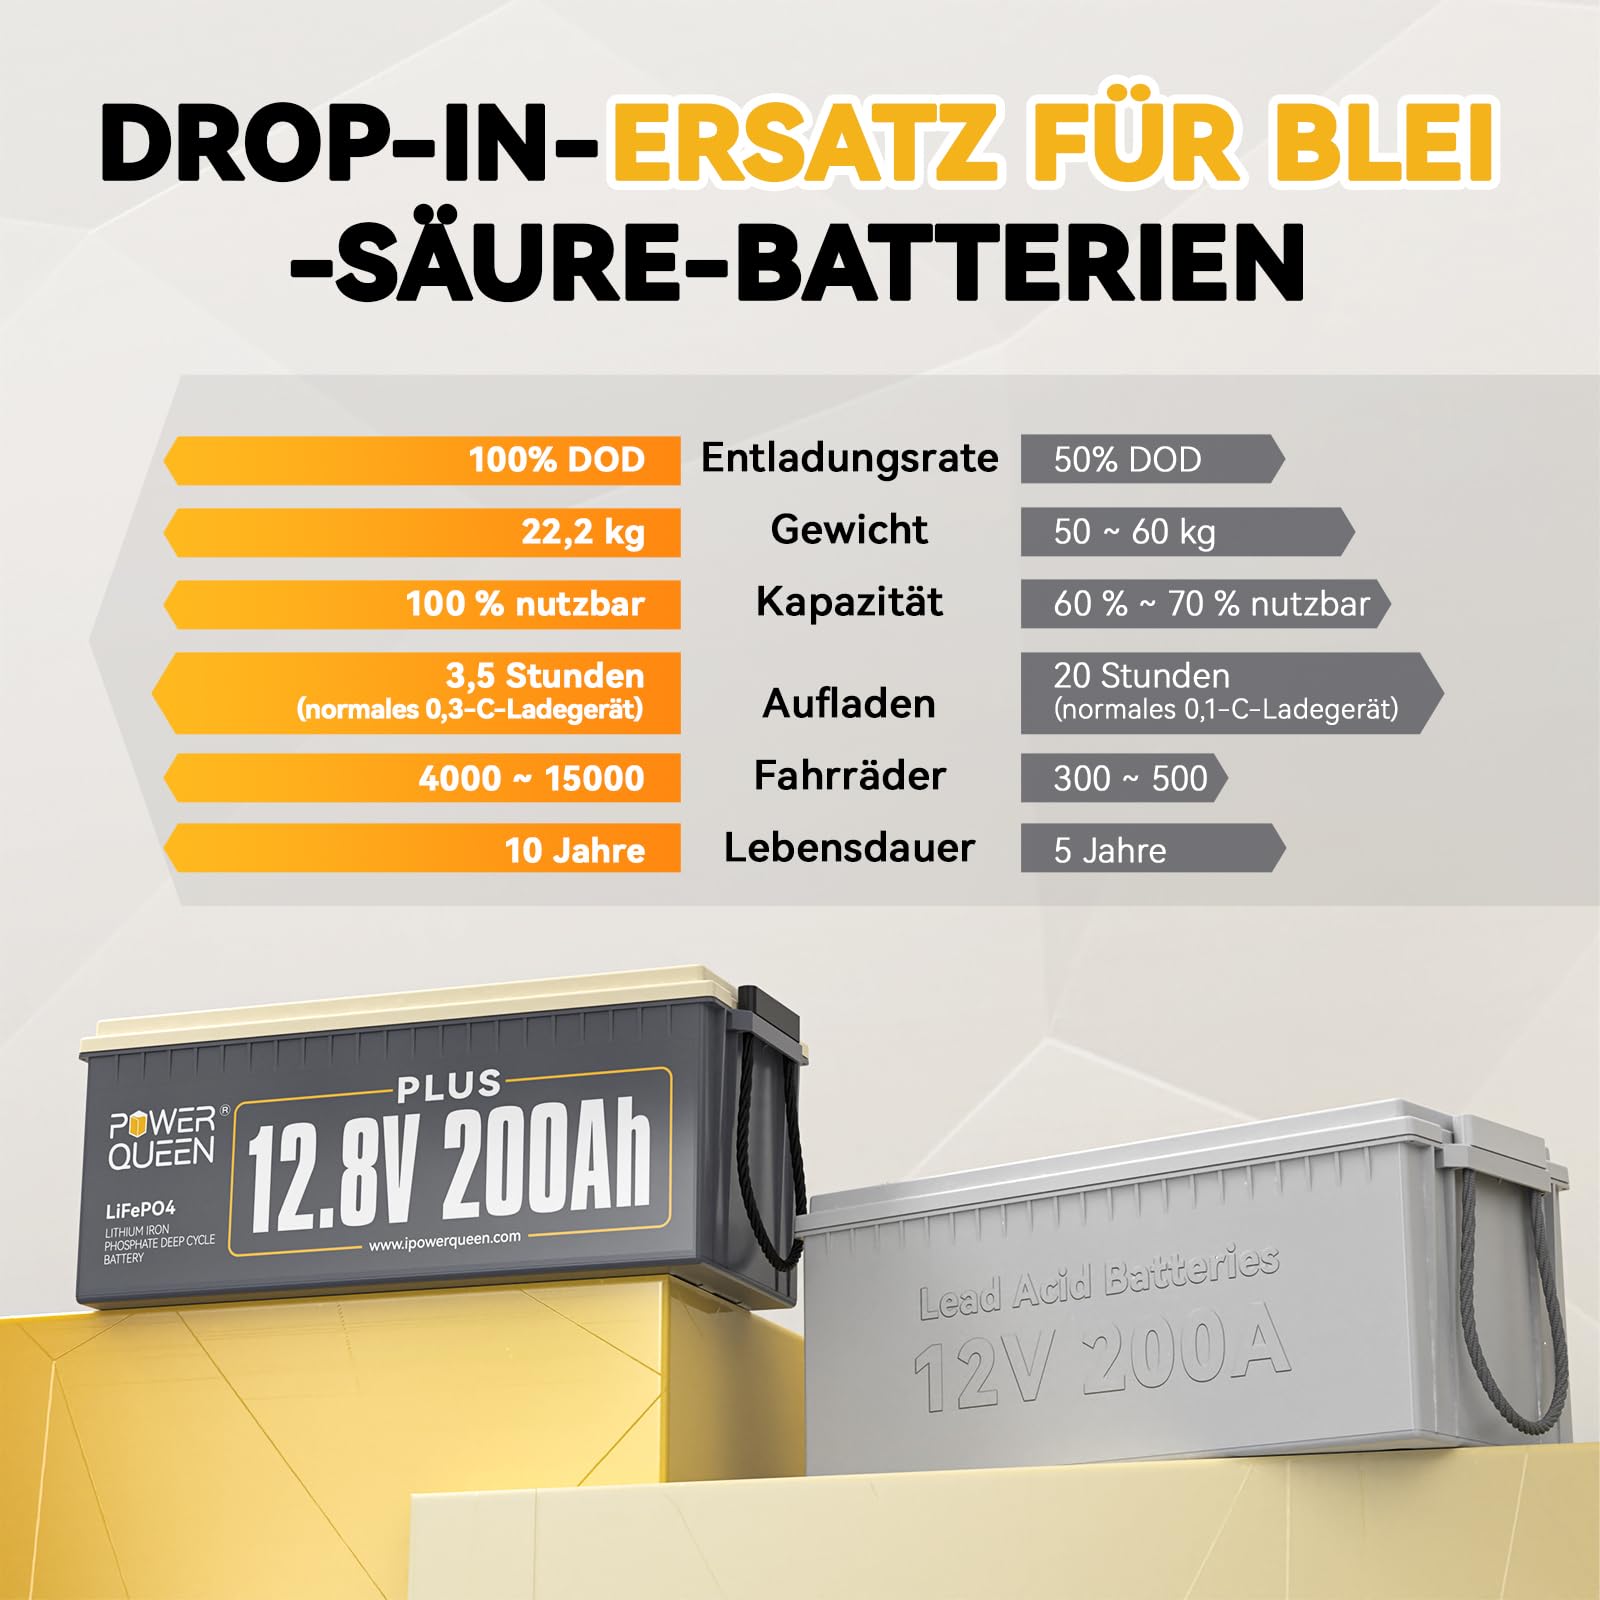 【TVA 0%】 Batterie Power Queen 12V 200Ah Plus LiFePO4, BMS 200A intégré